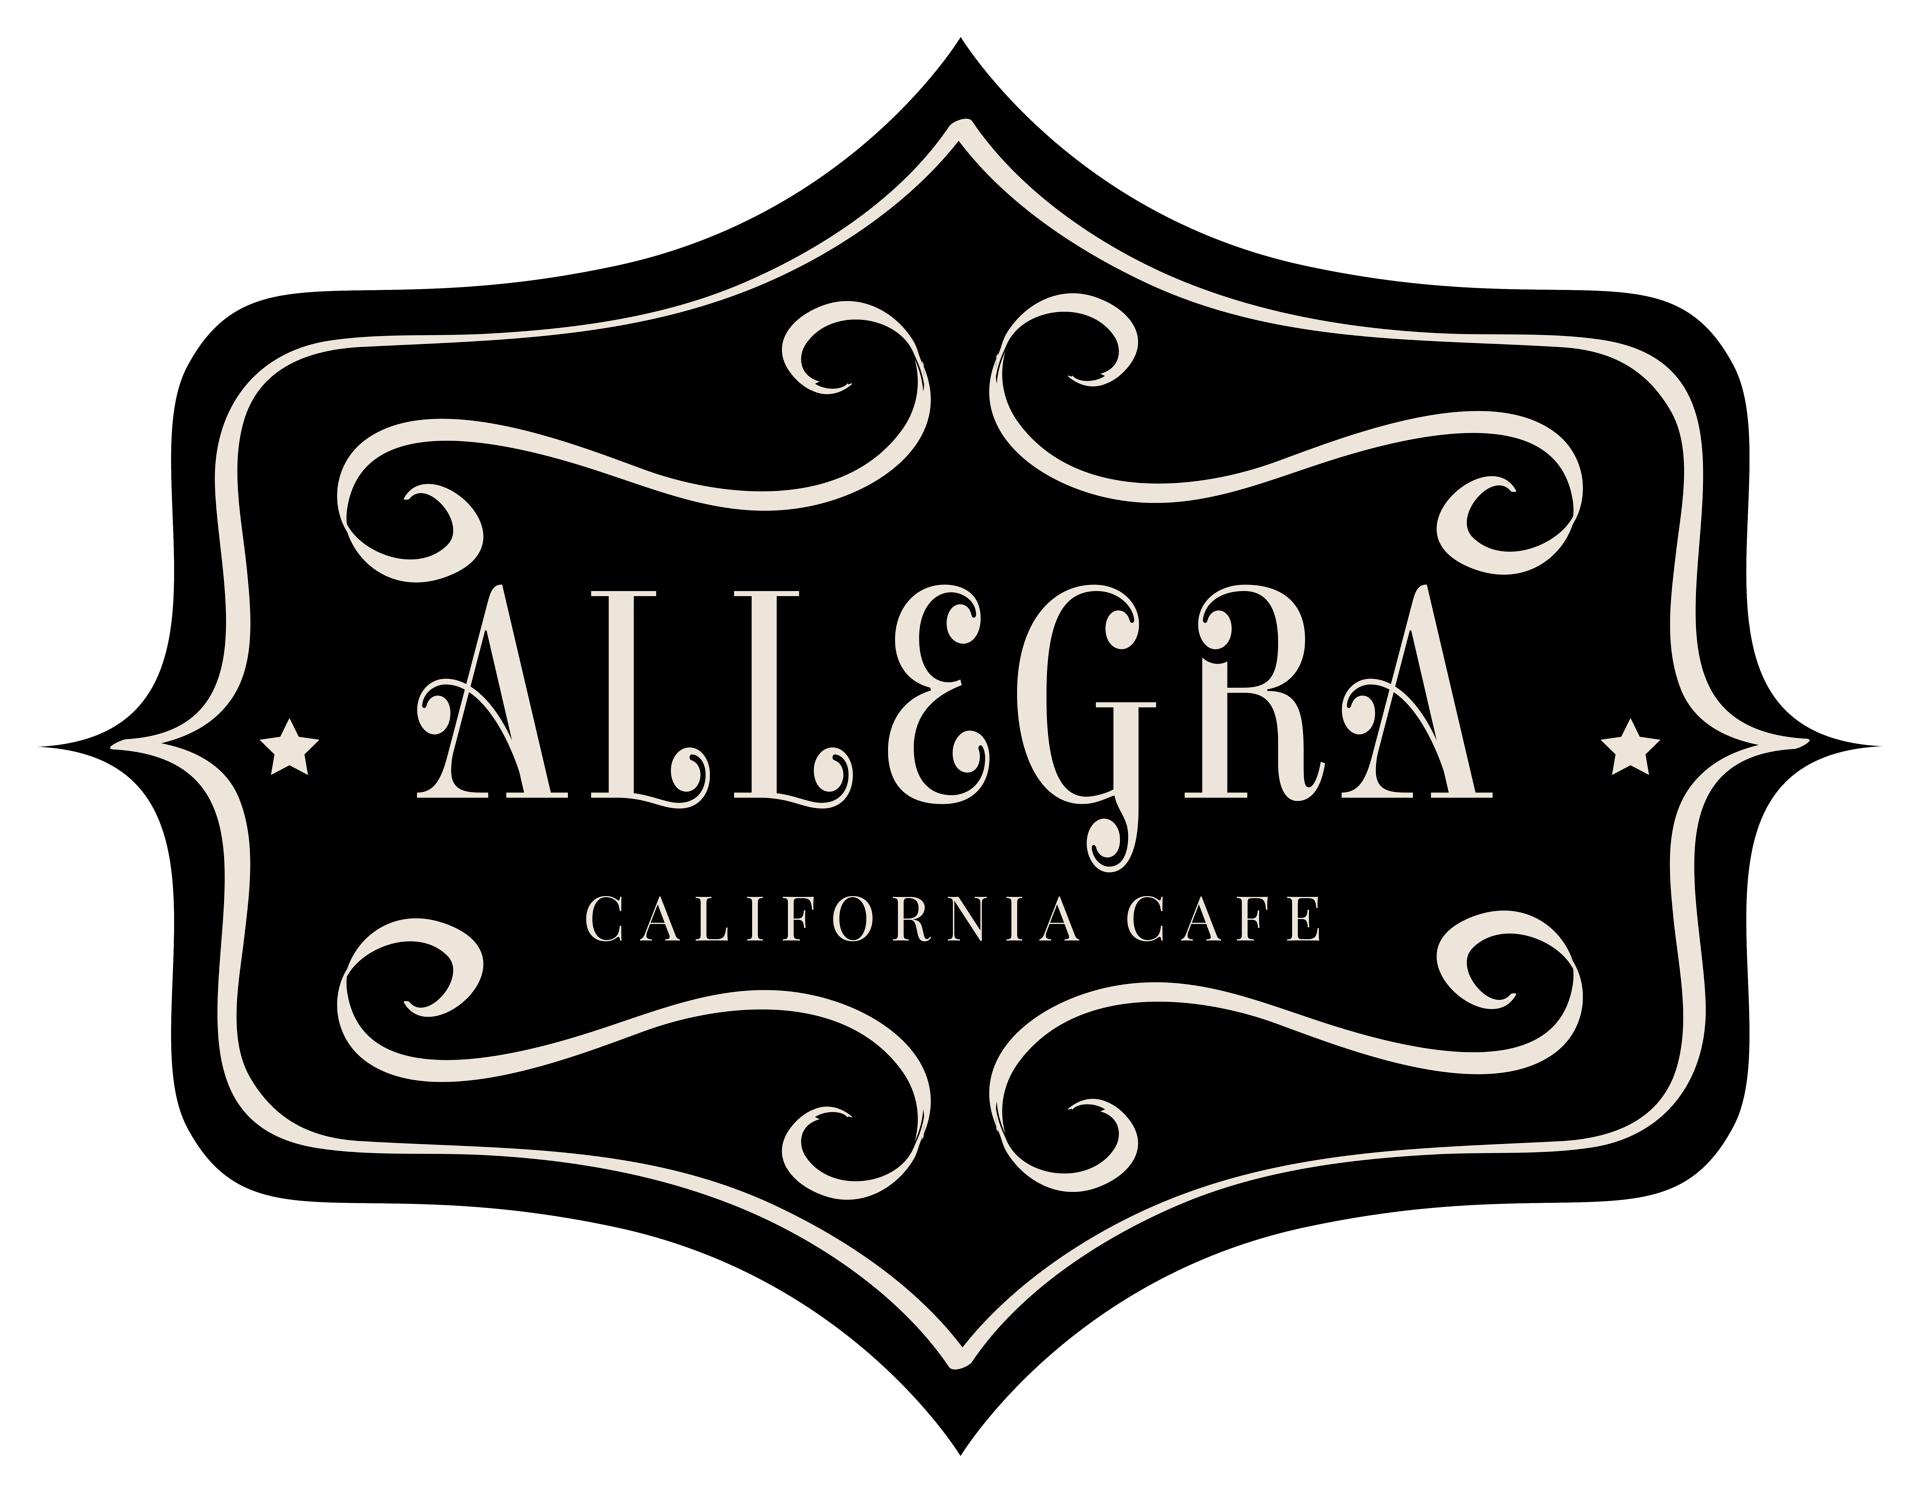 Allegra California Cafe - Italian Restaurant in Culver City, CA